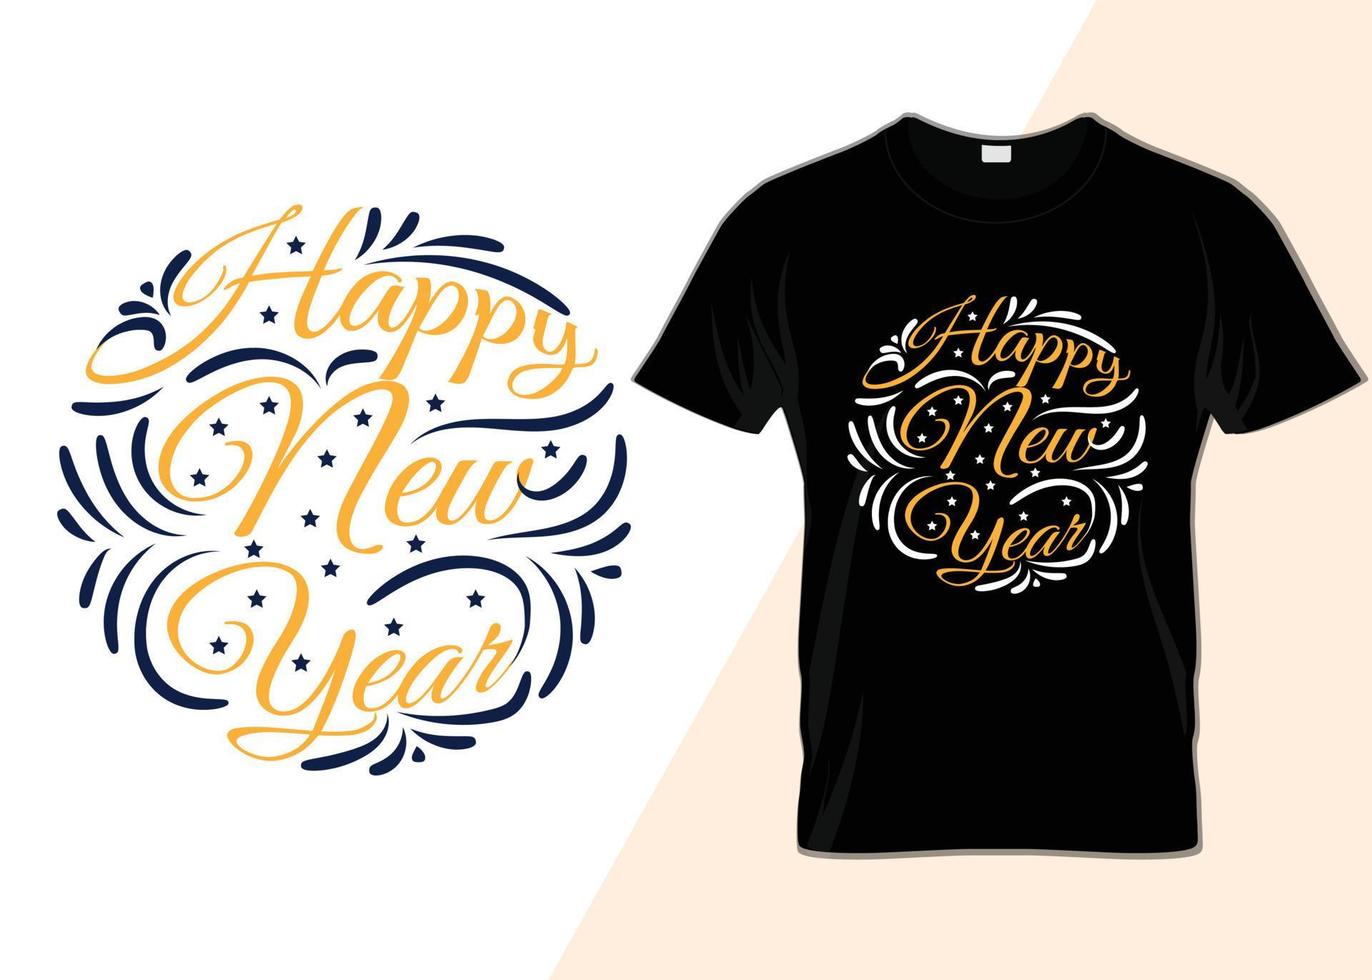 Happy new year 2023 Typography T-shirt design vector